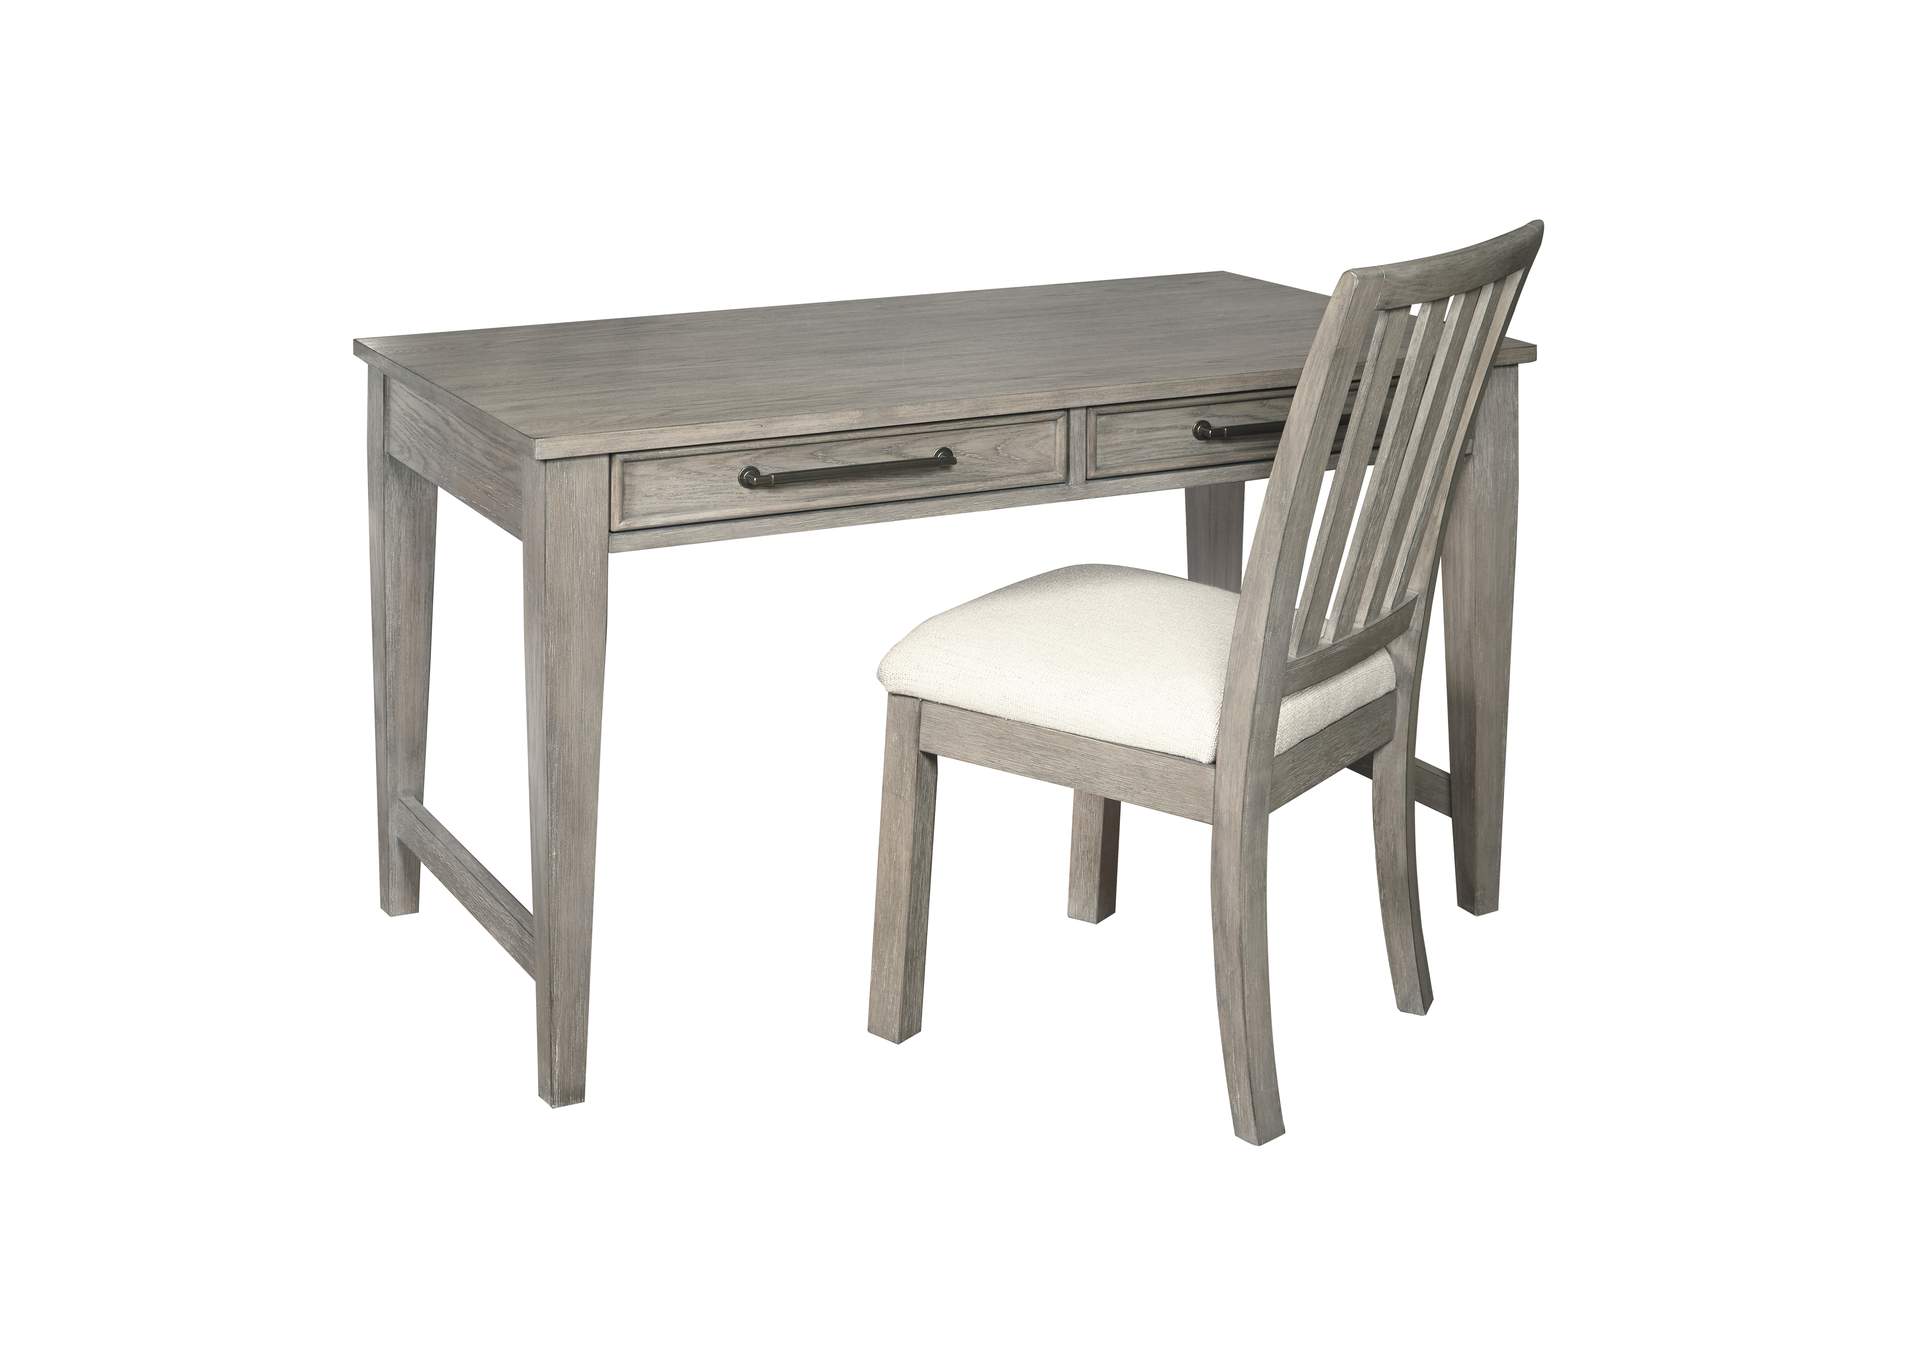 Andover Desk Chair,Pulaski Furniture